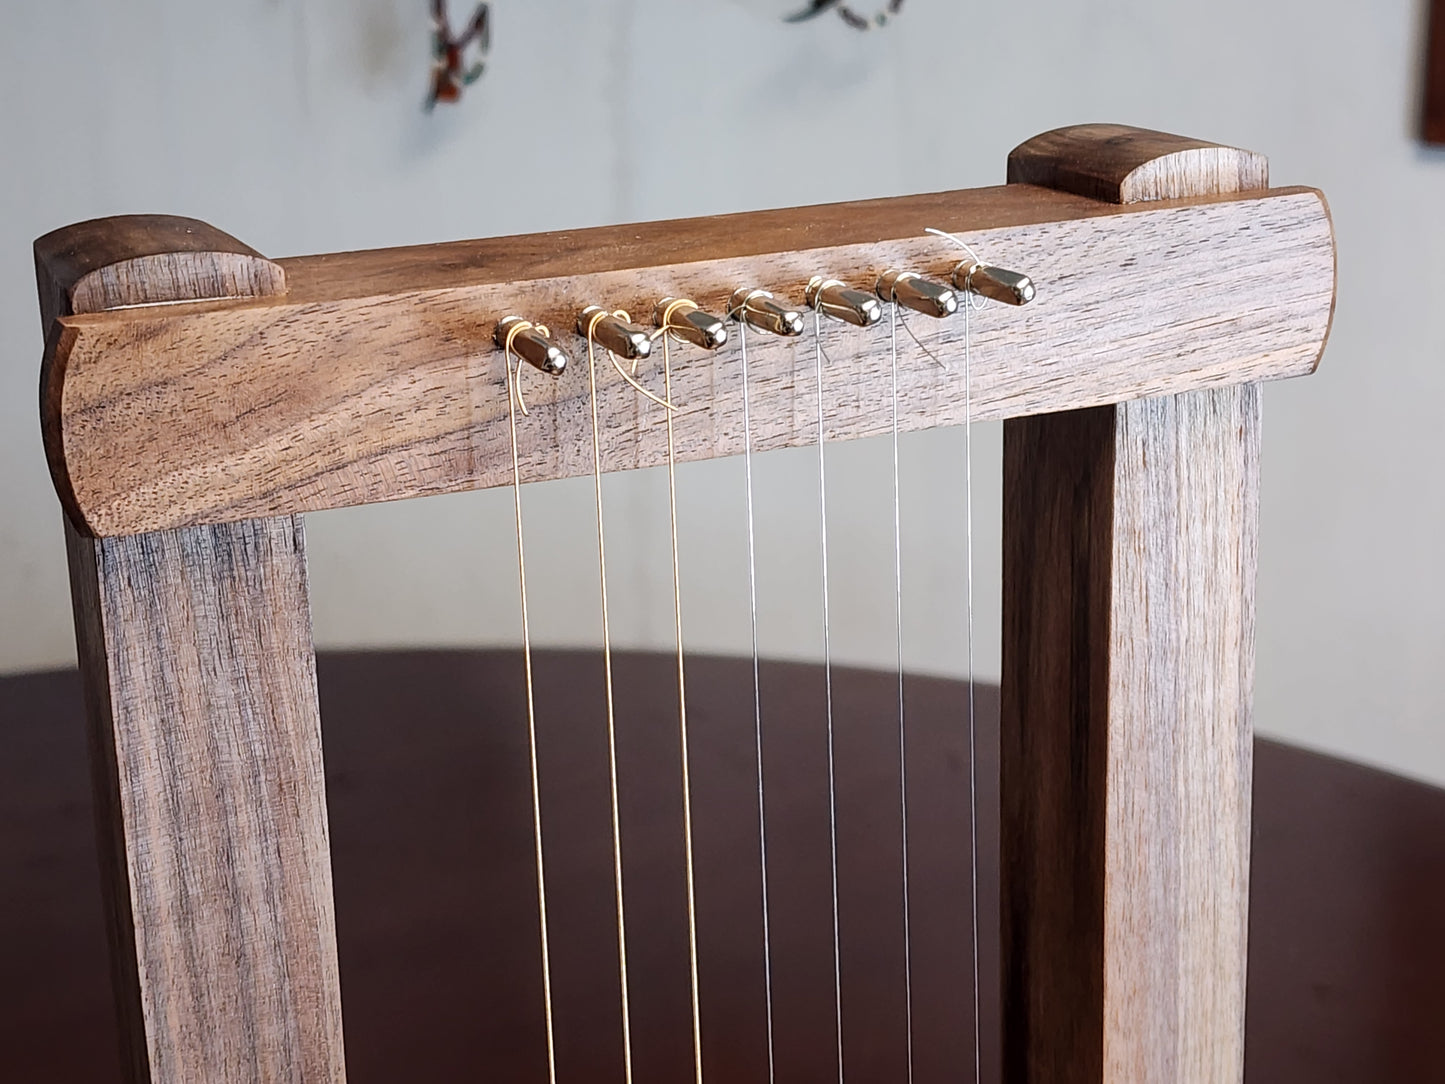 7 String Kinnor tuning pins